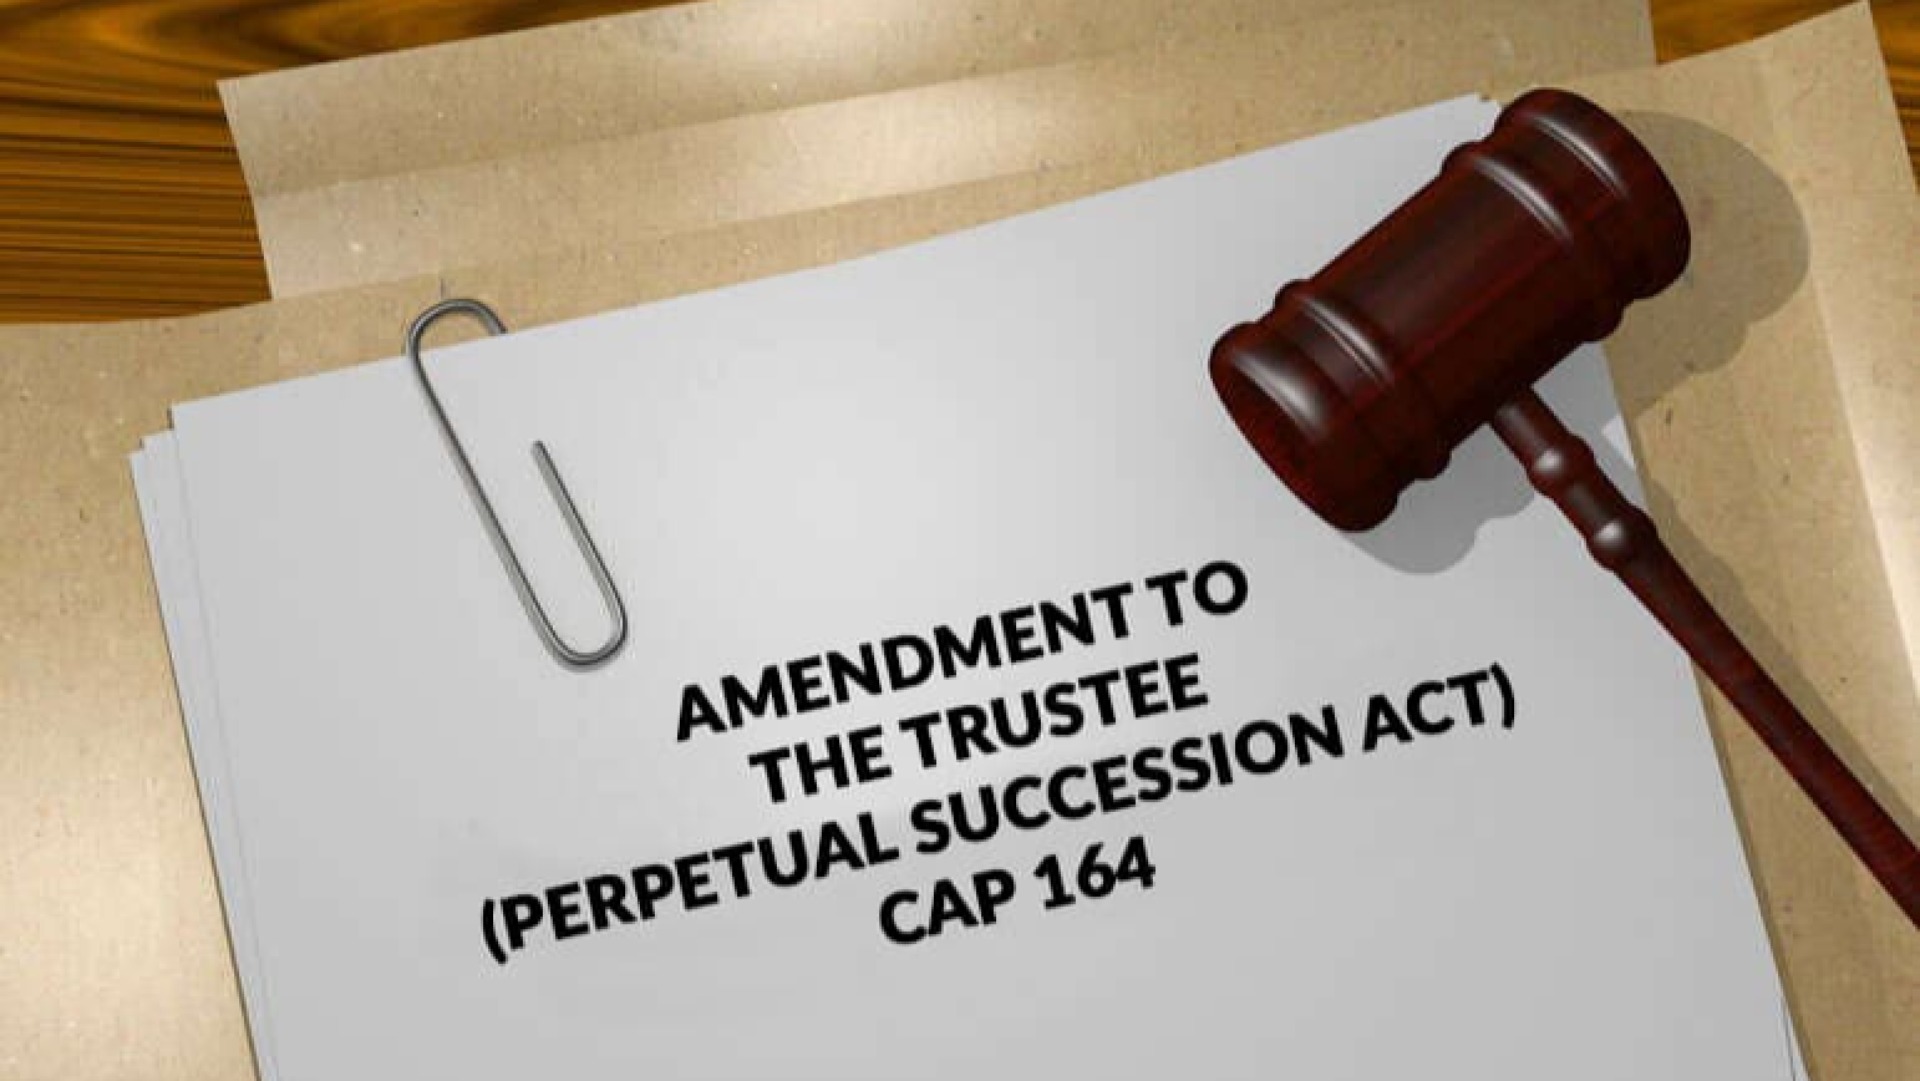 Amendments to The Trustee (Perpetual Succession Act) Cap 164 